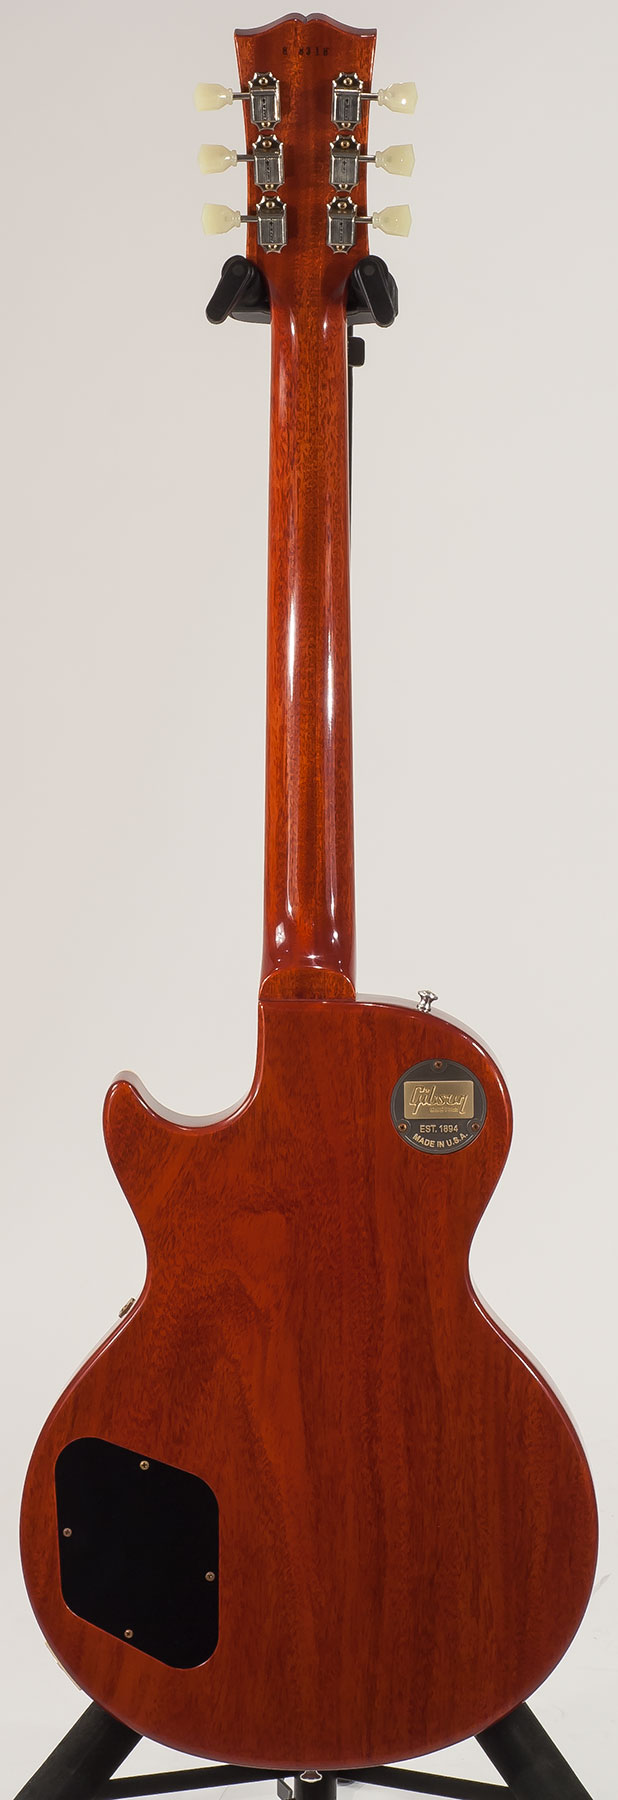 Gibson Custom Shop Les Paul Standard 1958 2h Ht Rw - Vos Royal Teaburst - Guitarra eléctrica de corte único. - Variation 1